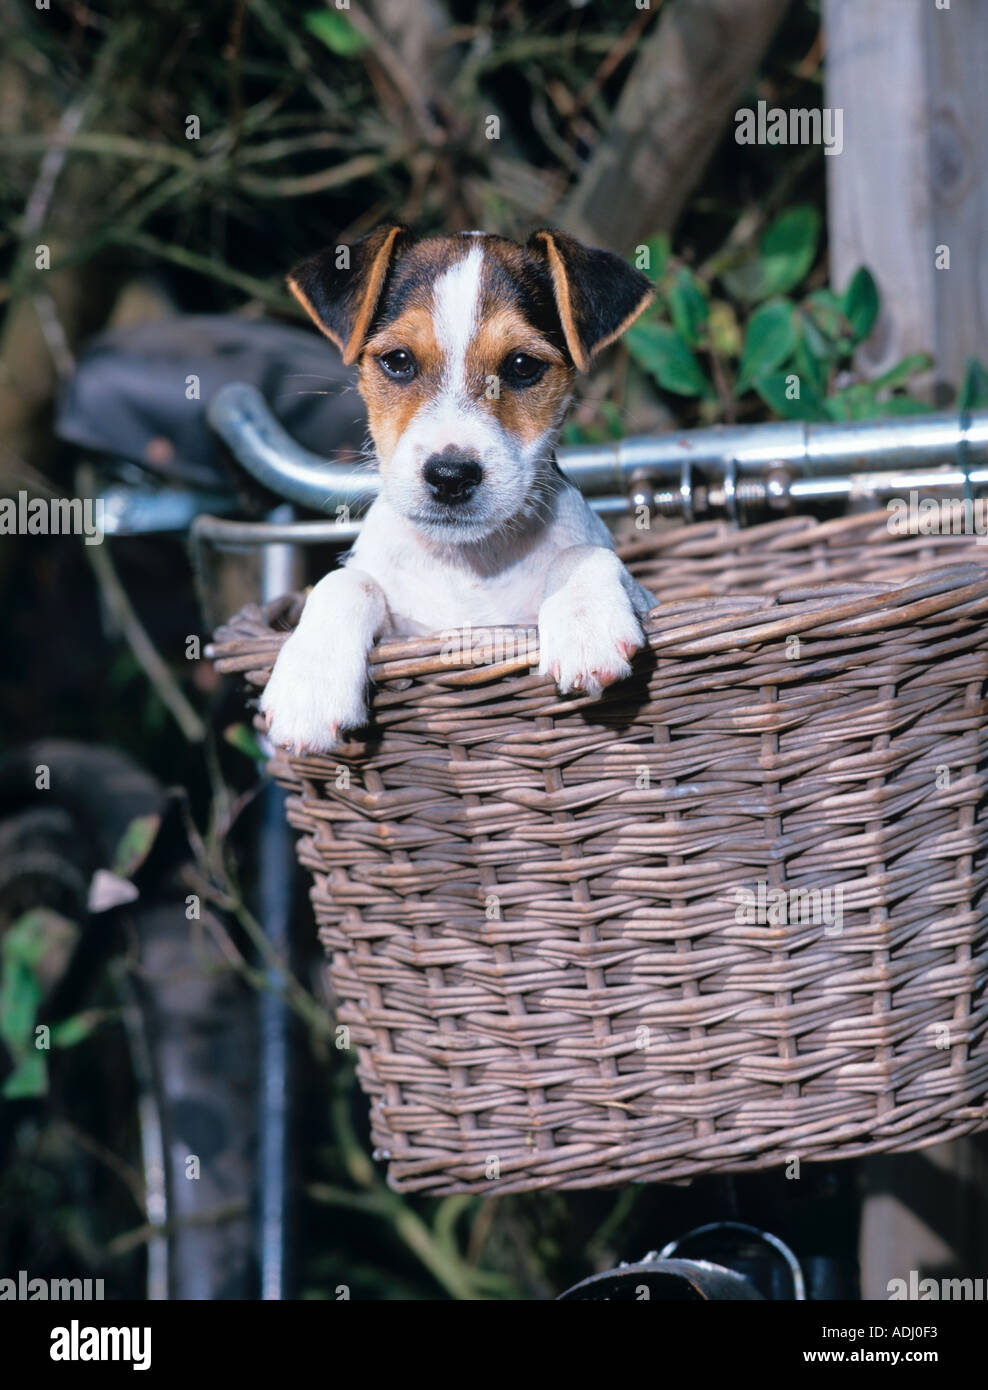 Jack-Russell-Terrier Welpen im Fahrradkorb Stockfotografie - Alamy